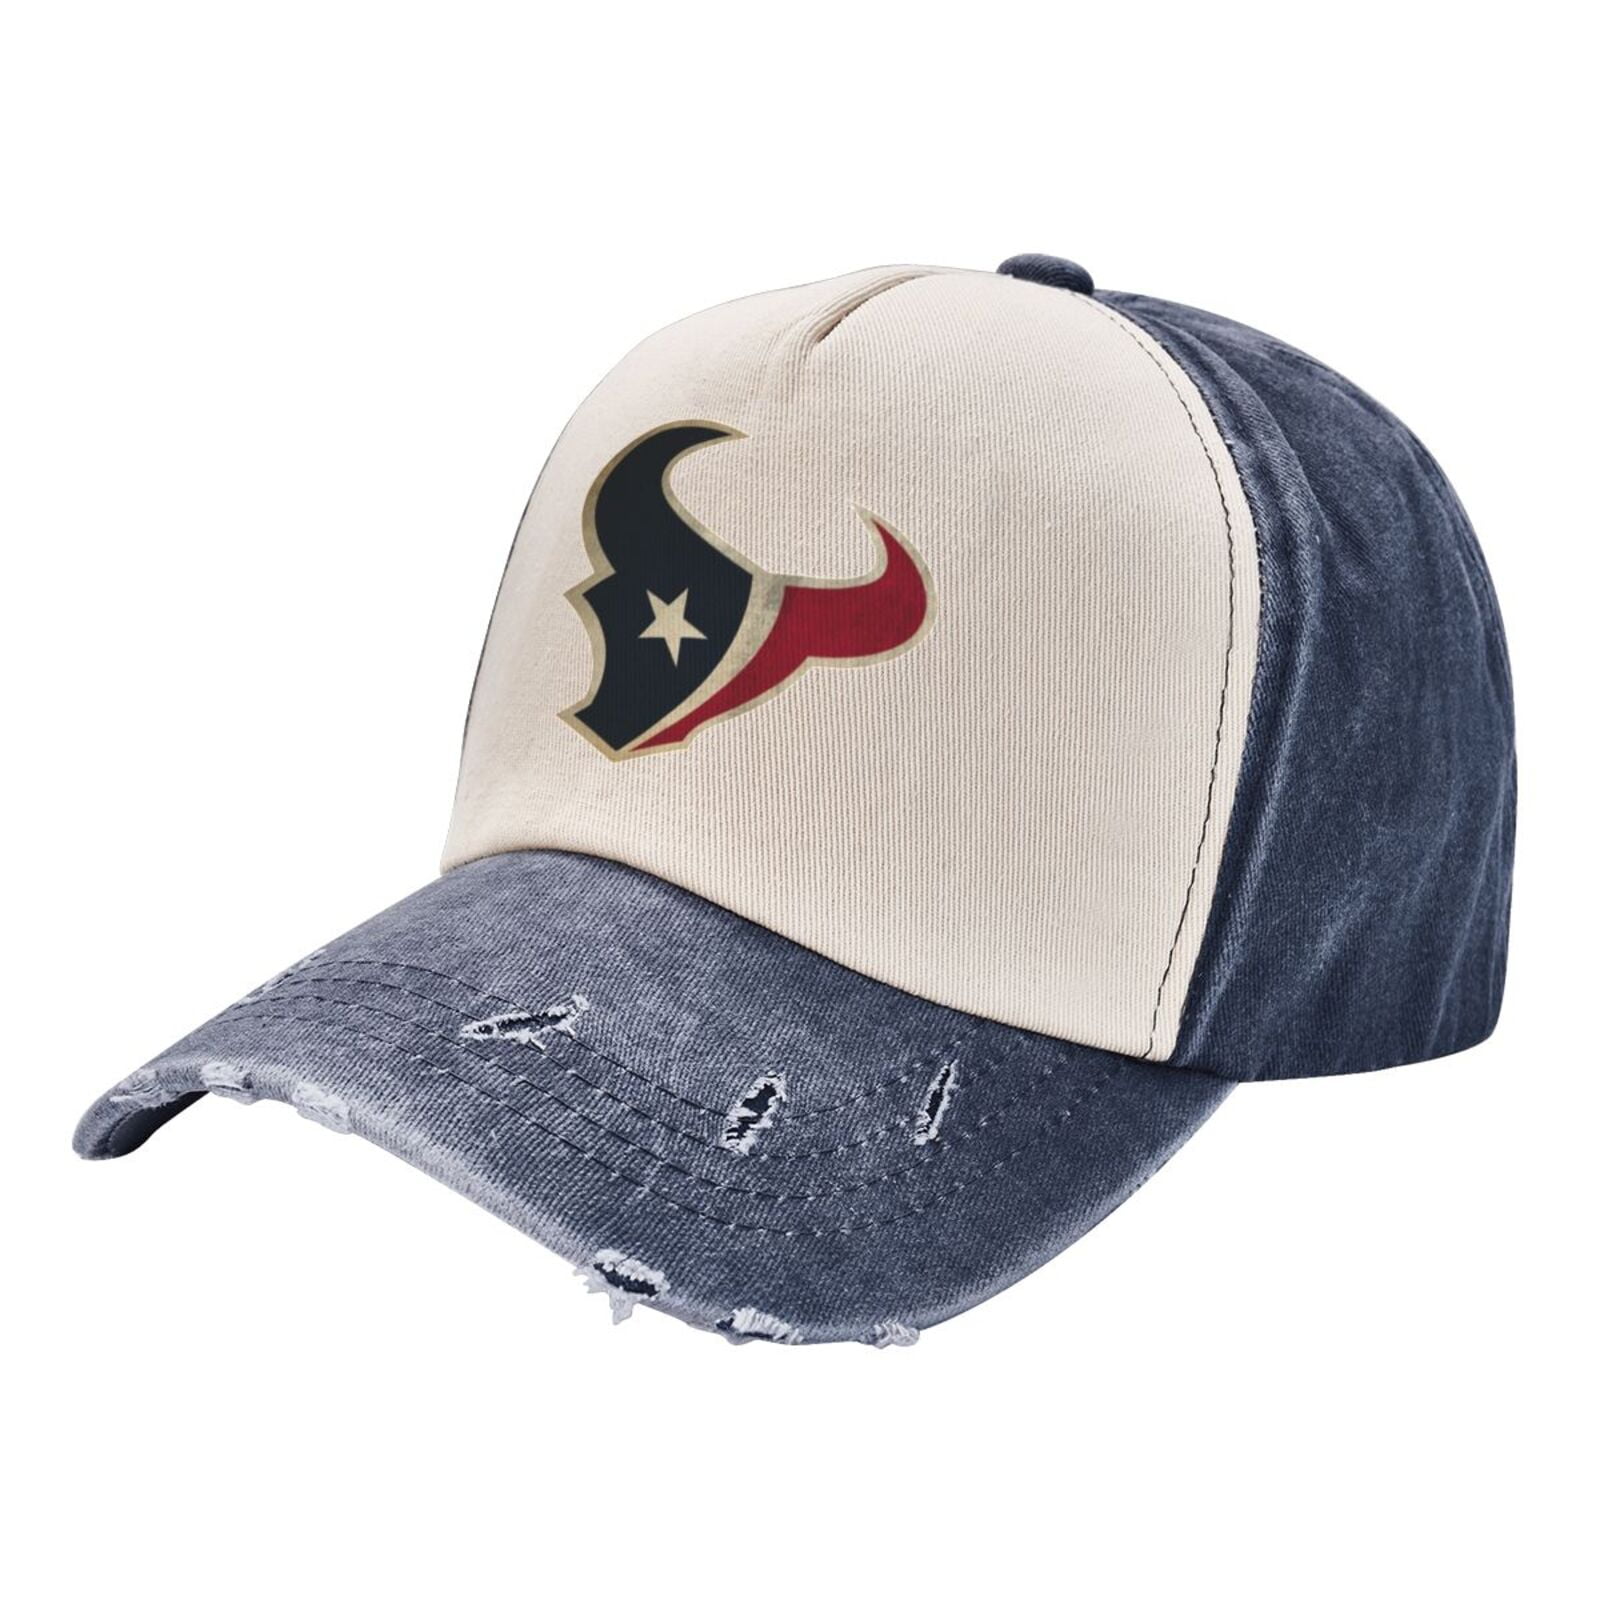 Houston-Texans Baseball Cap Adjustable Hat Sun Shade Peaked Cap ...